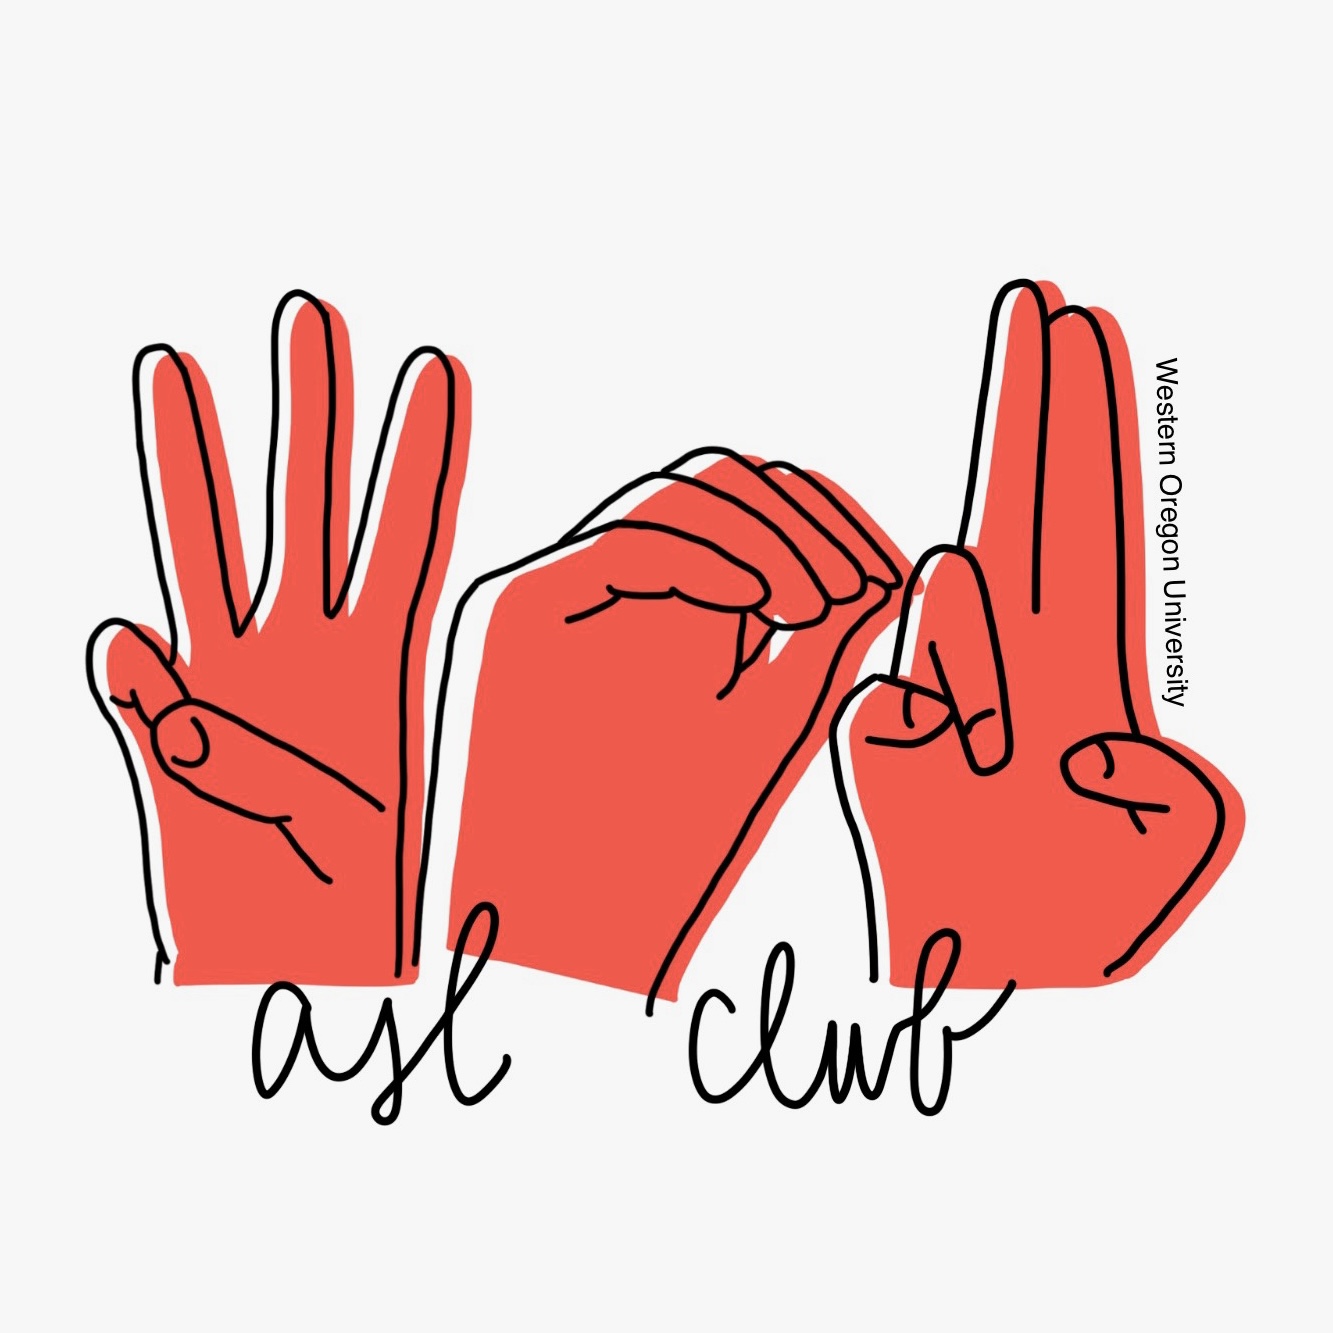 ASL Club’s 30th birthday